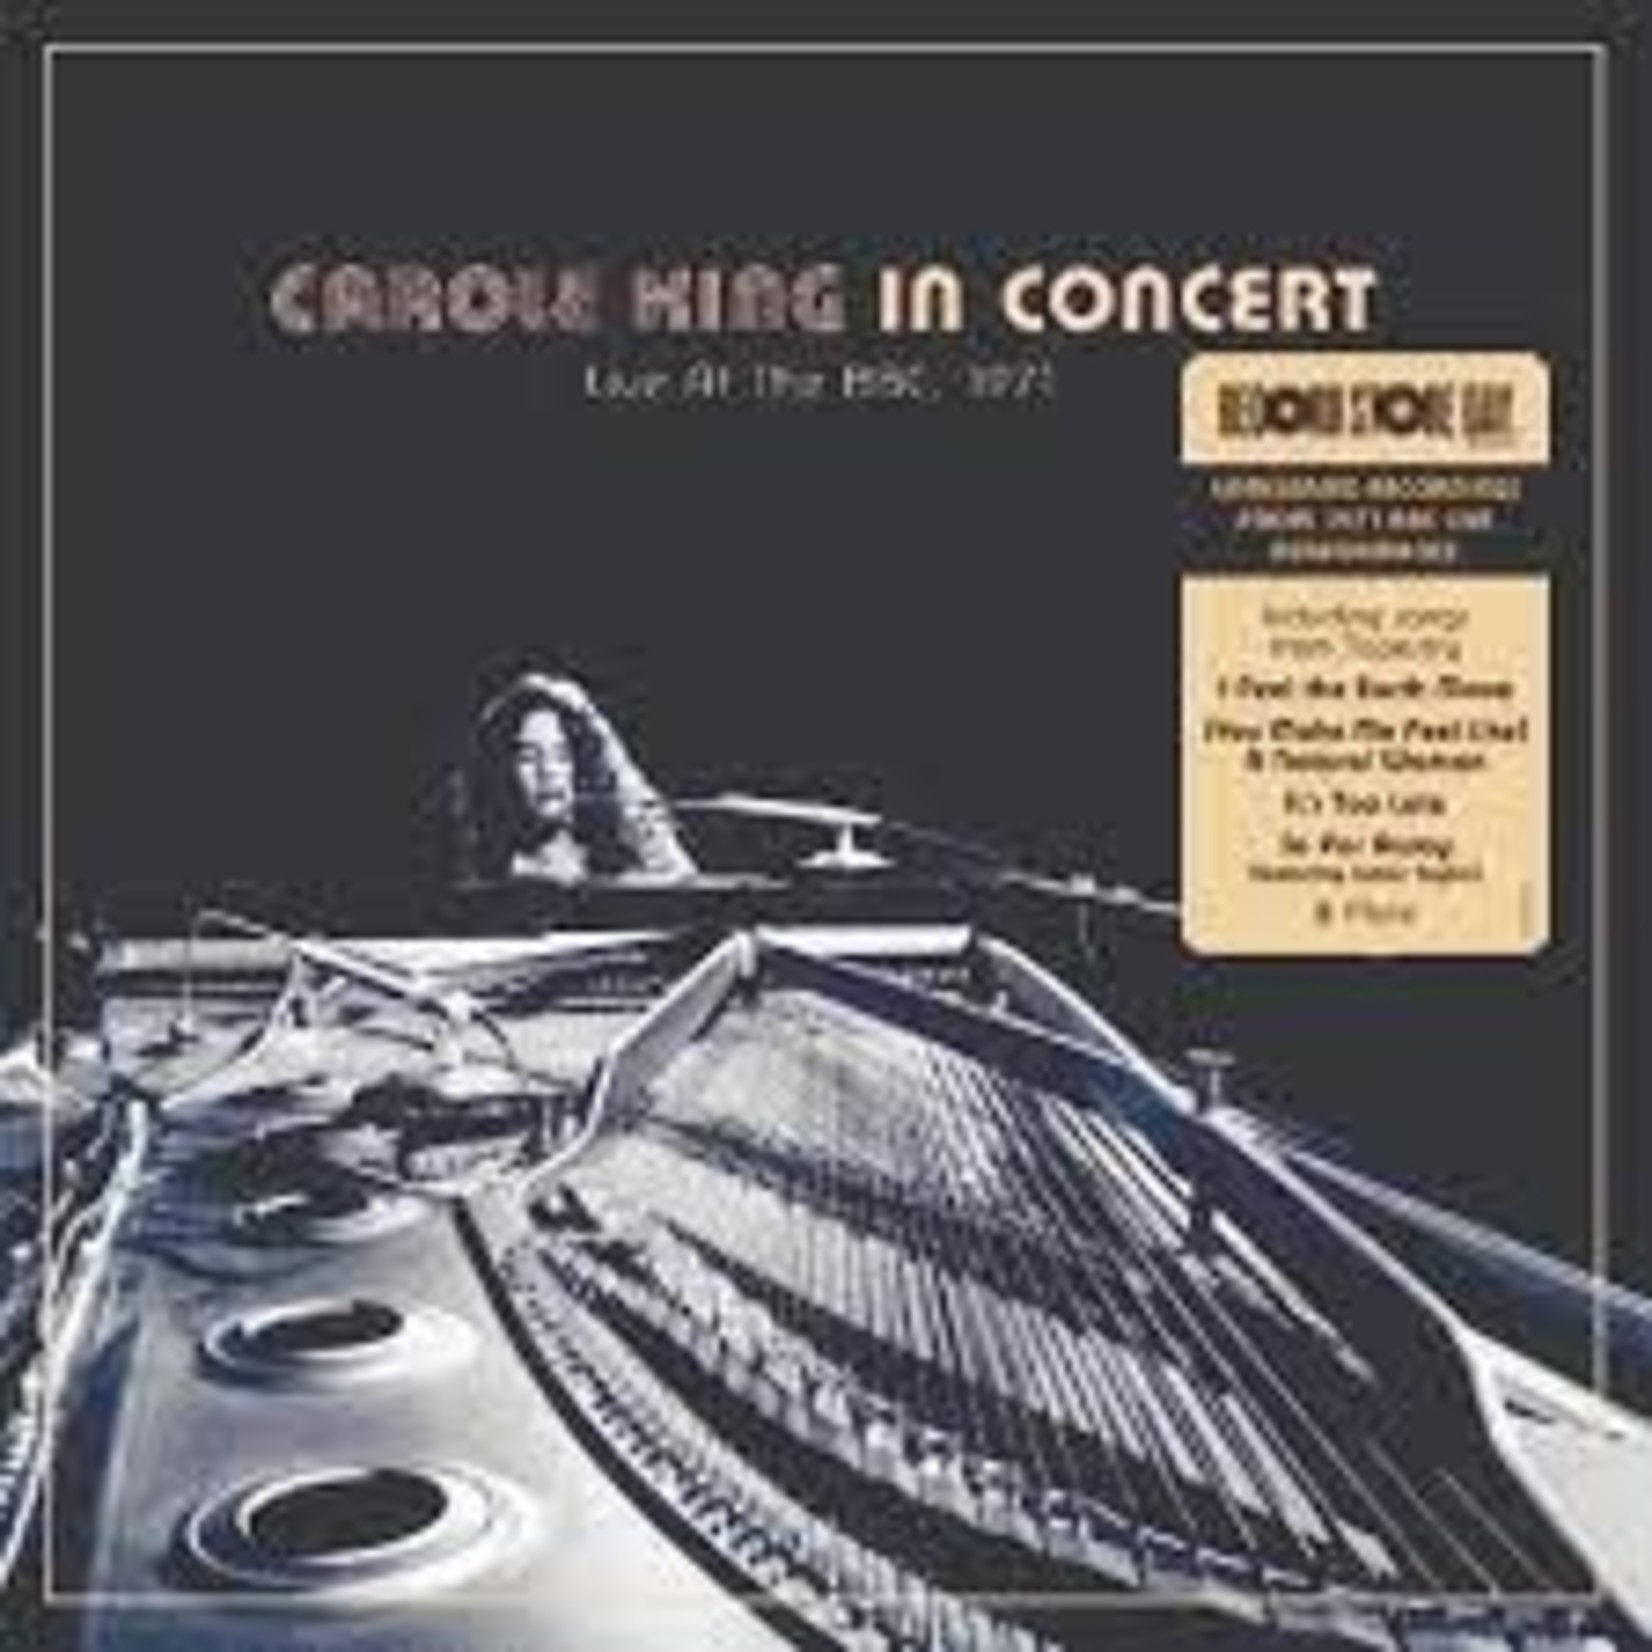 Vinyl Carole King  - Live At The BBC 1971